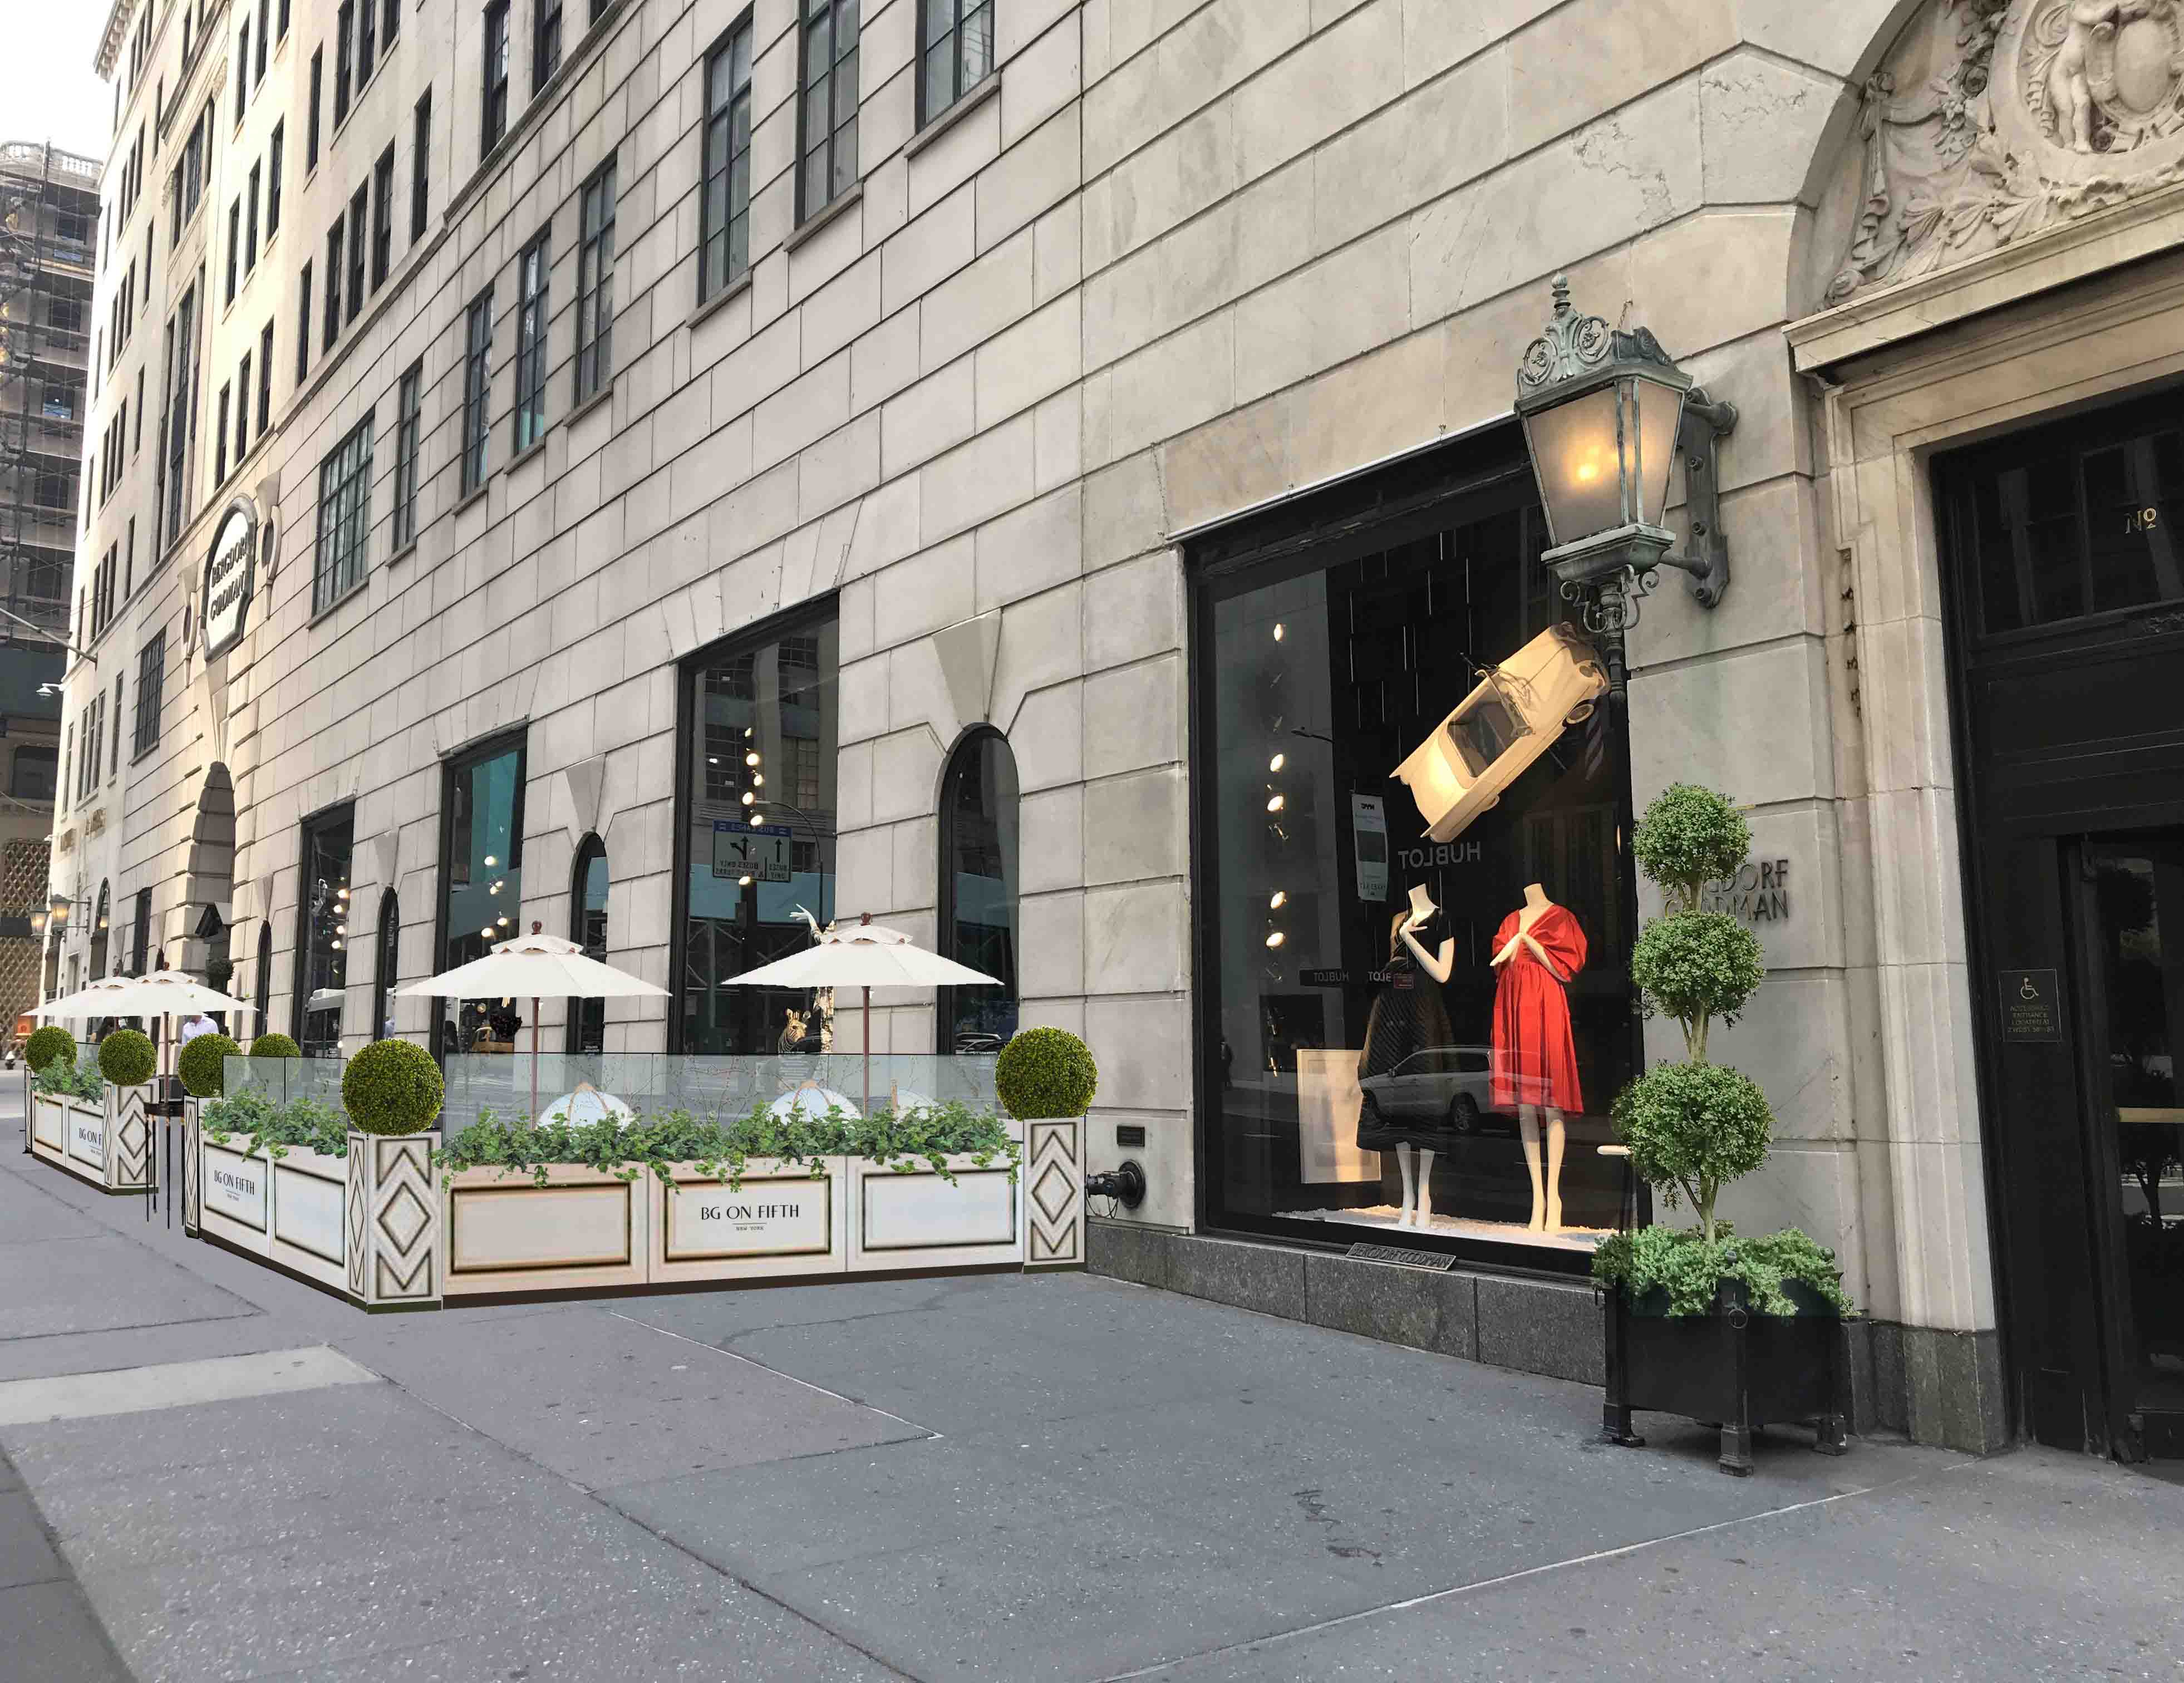 BG - Bergdorf Goodman  New York, New York, United States - Venue Report